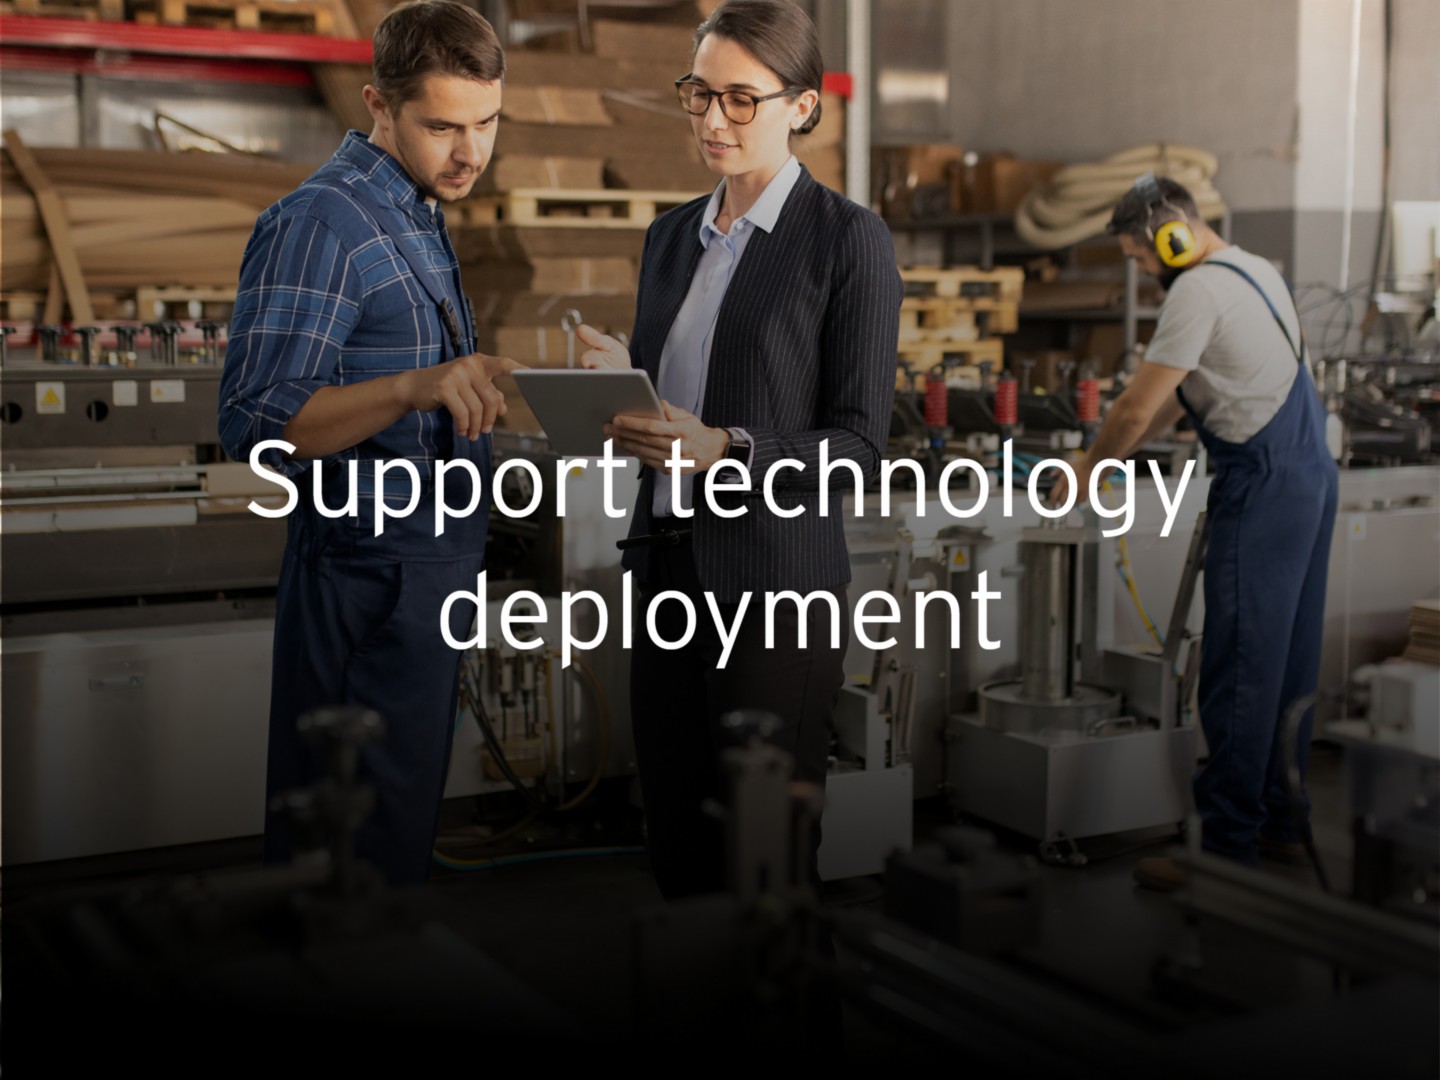 Support technology deployment